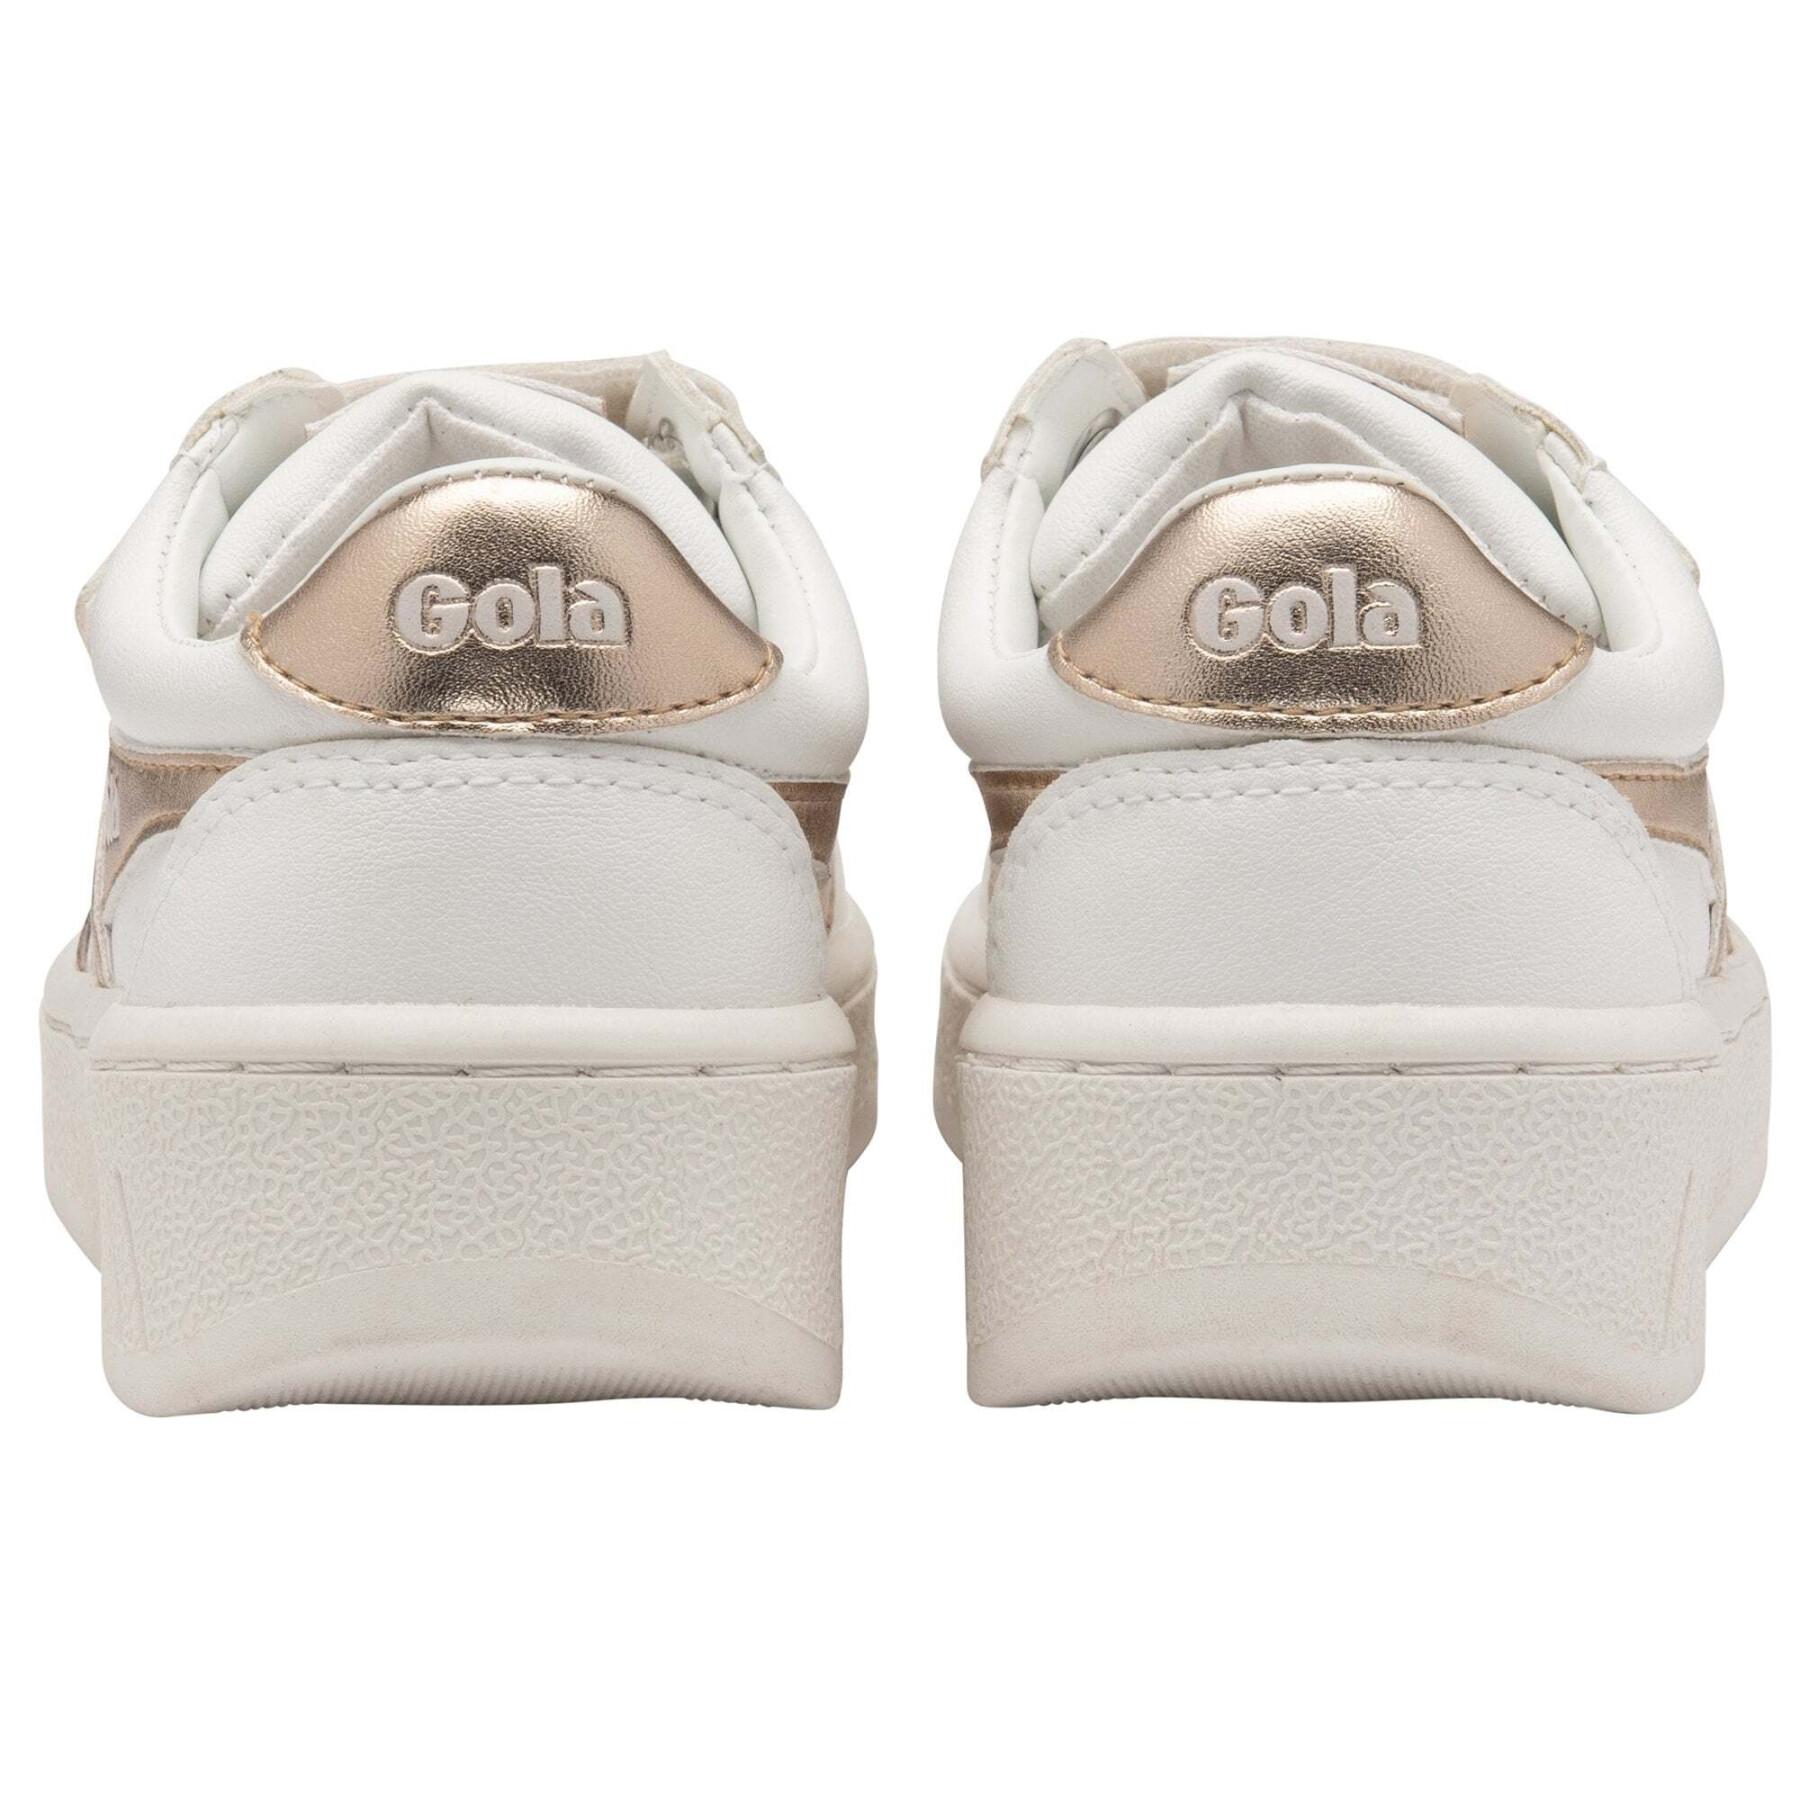 Scratch sneakers for kids Gola Grandslam Shine